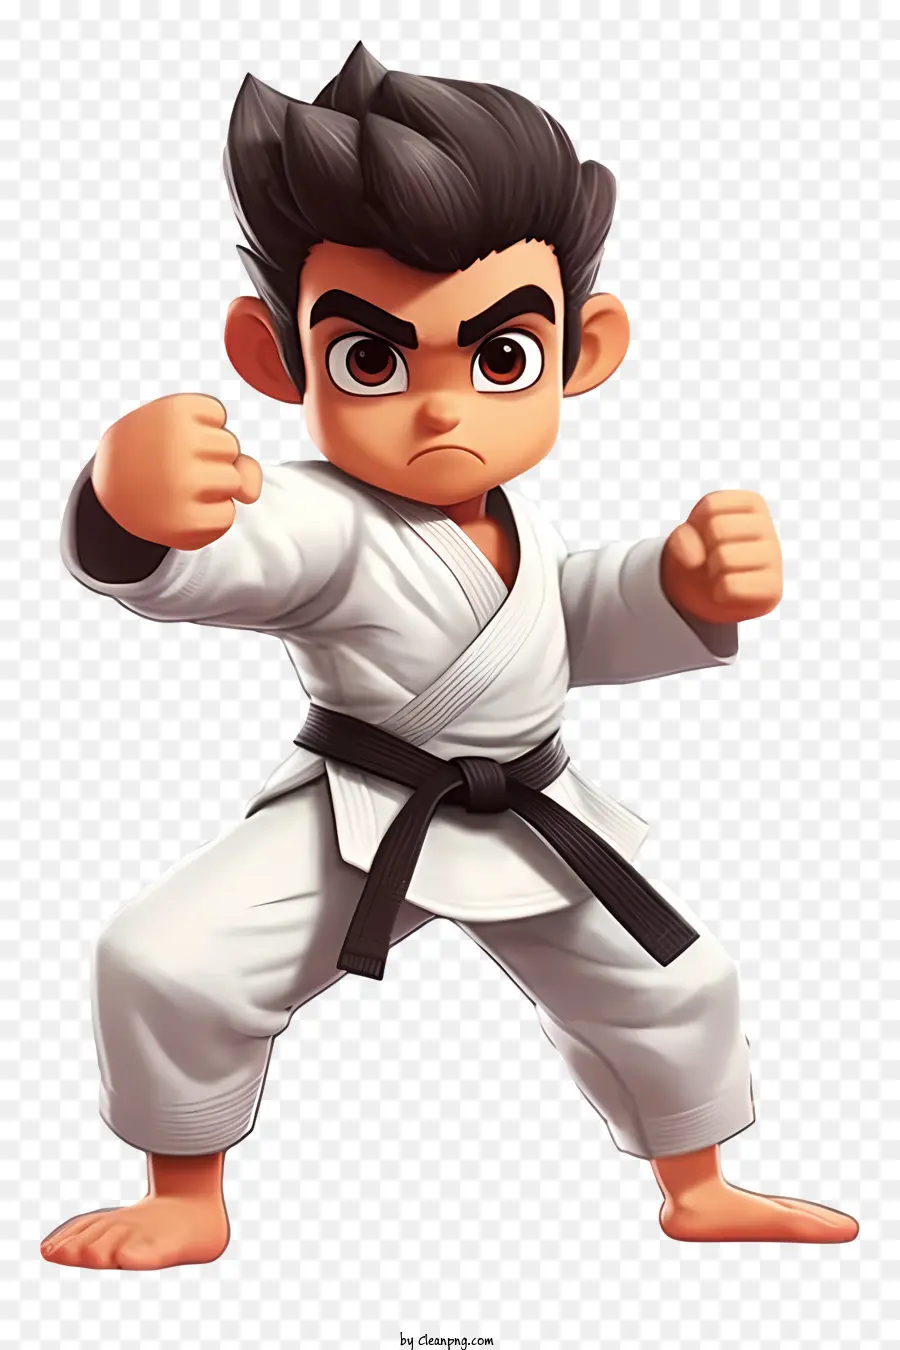 Fighter Karate Karate Martial Arts Outfit Karate GI - Illustrazione del giovane in posa di karate